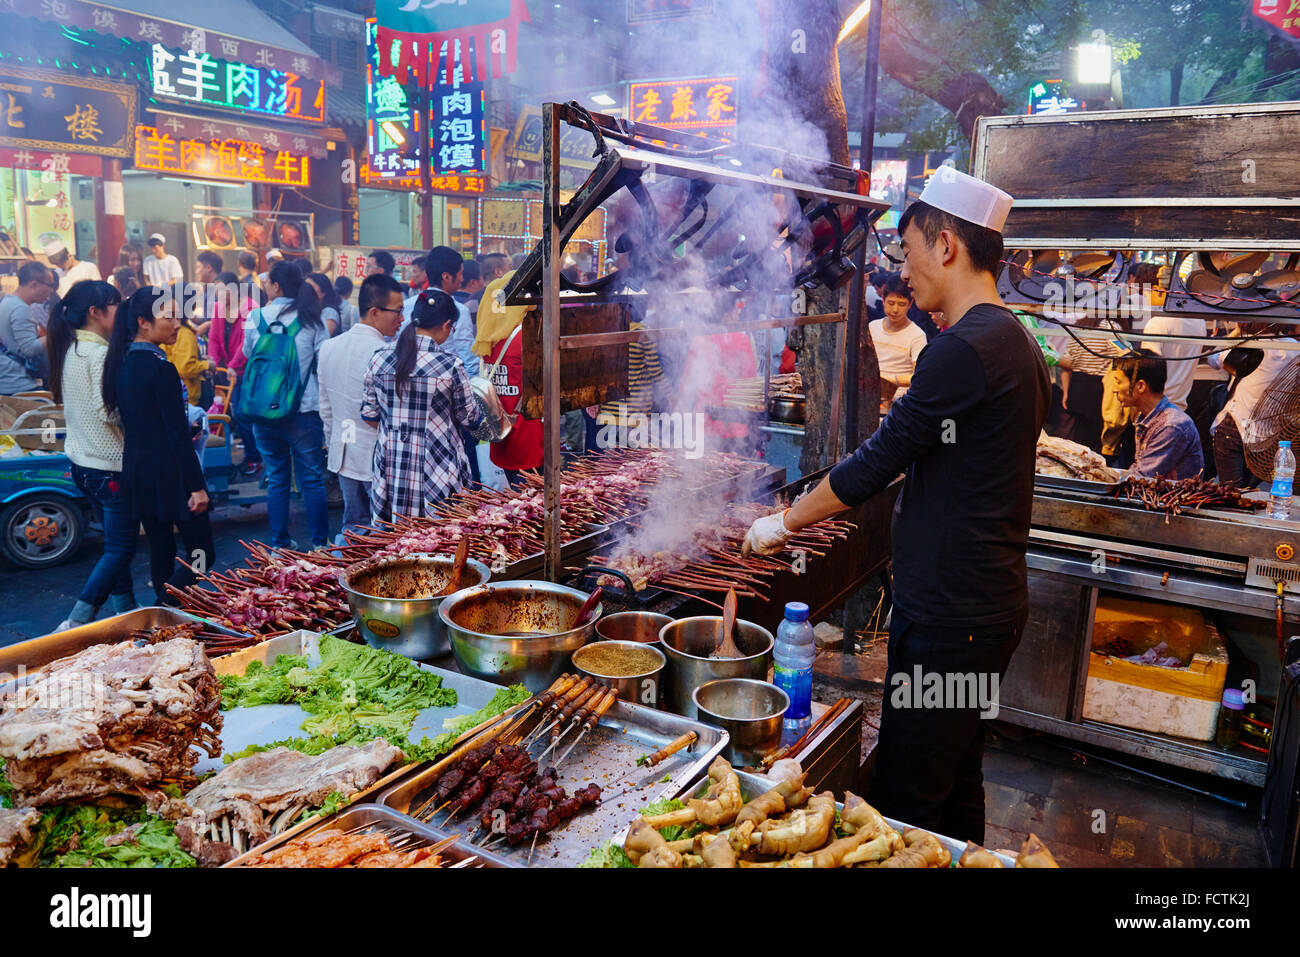 China, Shaanxi province, Xian, Hui neighborhood, food market, kebab shop Stock Photo